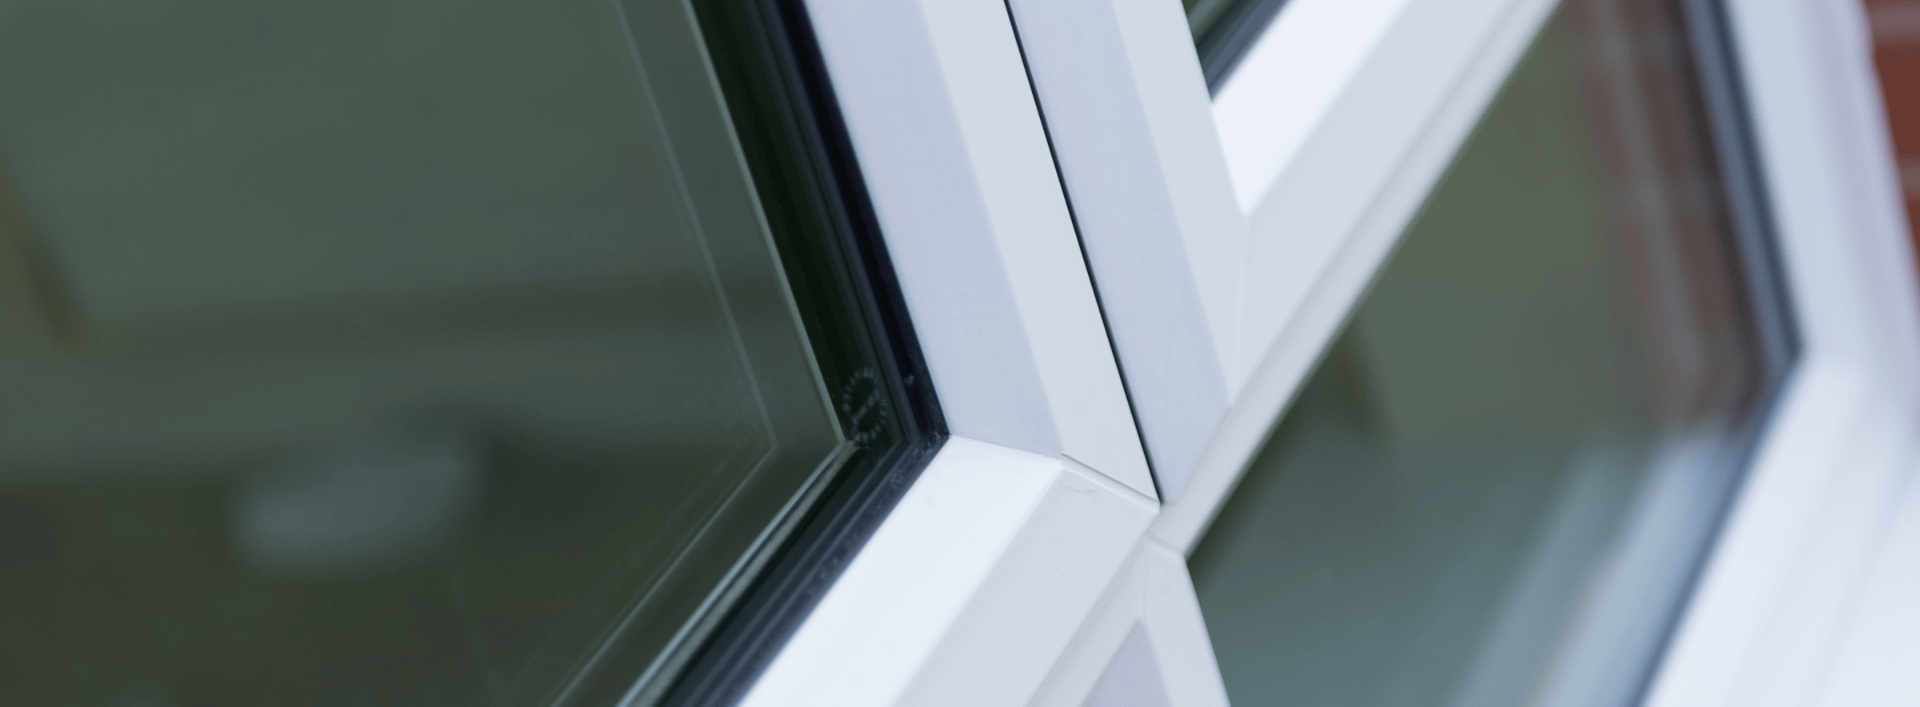 Close up of pvcu window frame